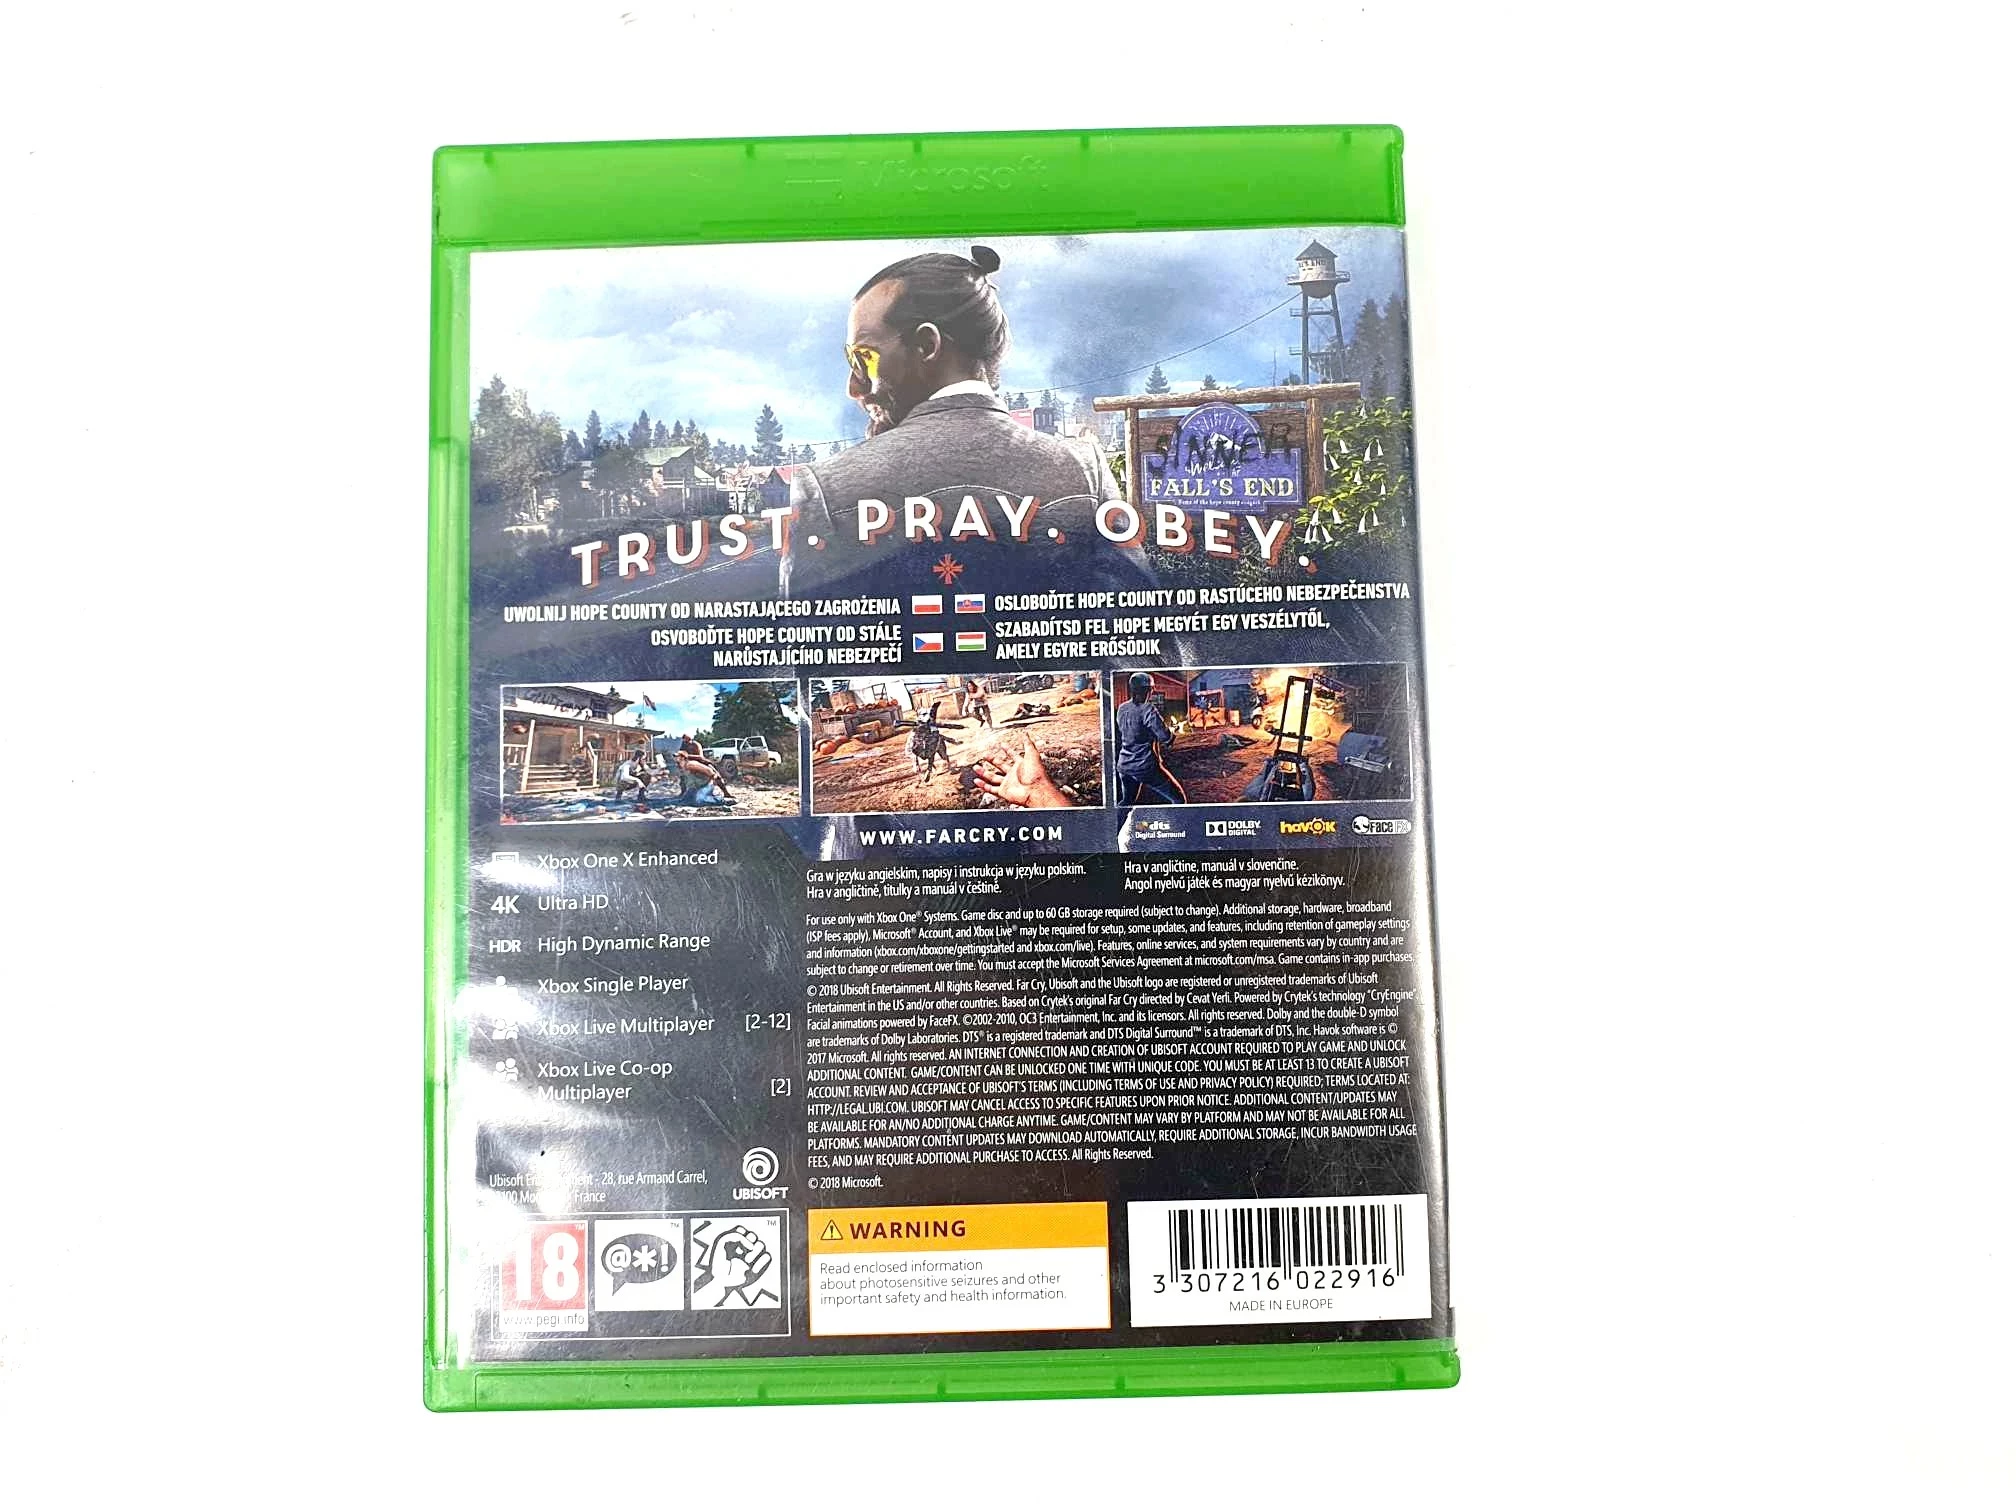 Far Cry 5 XBOX ONE PROMOÇÃO - Raimundogamer midia digital